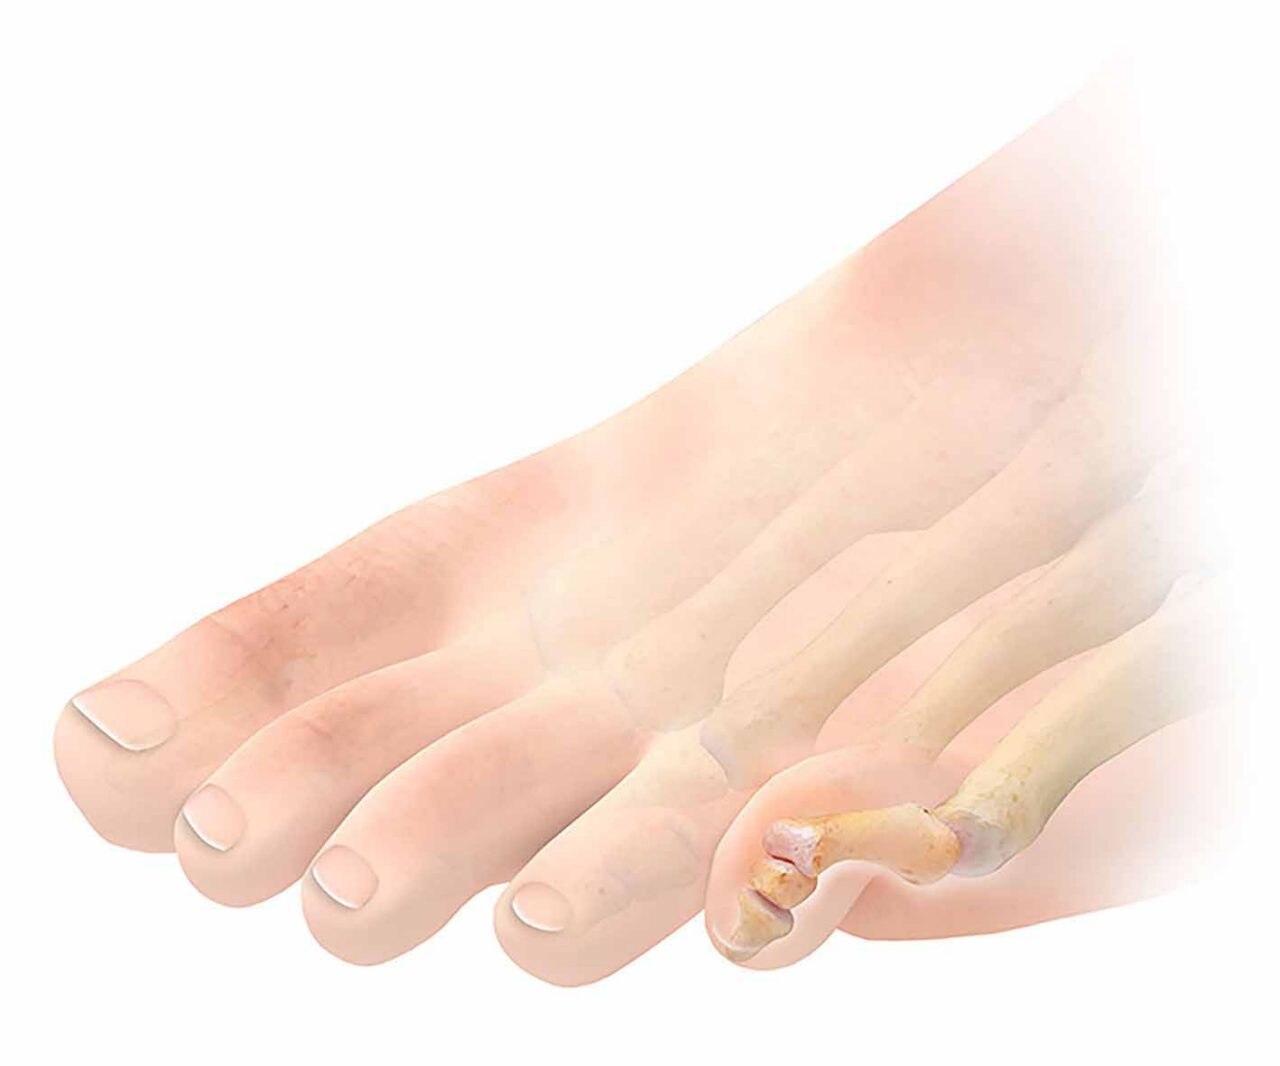 Toes-lateral-hammertoe